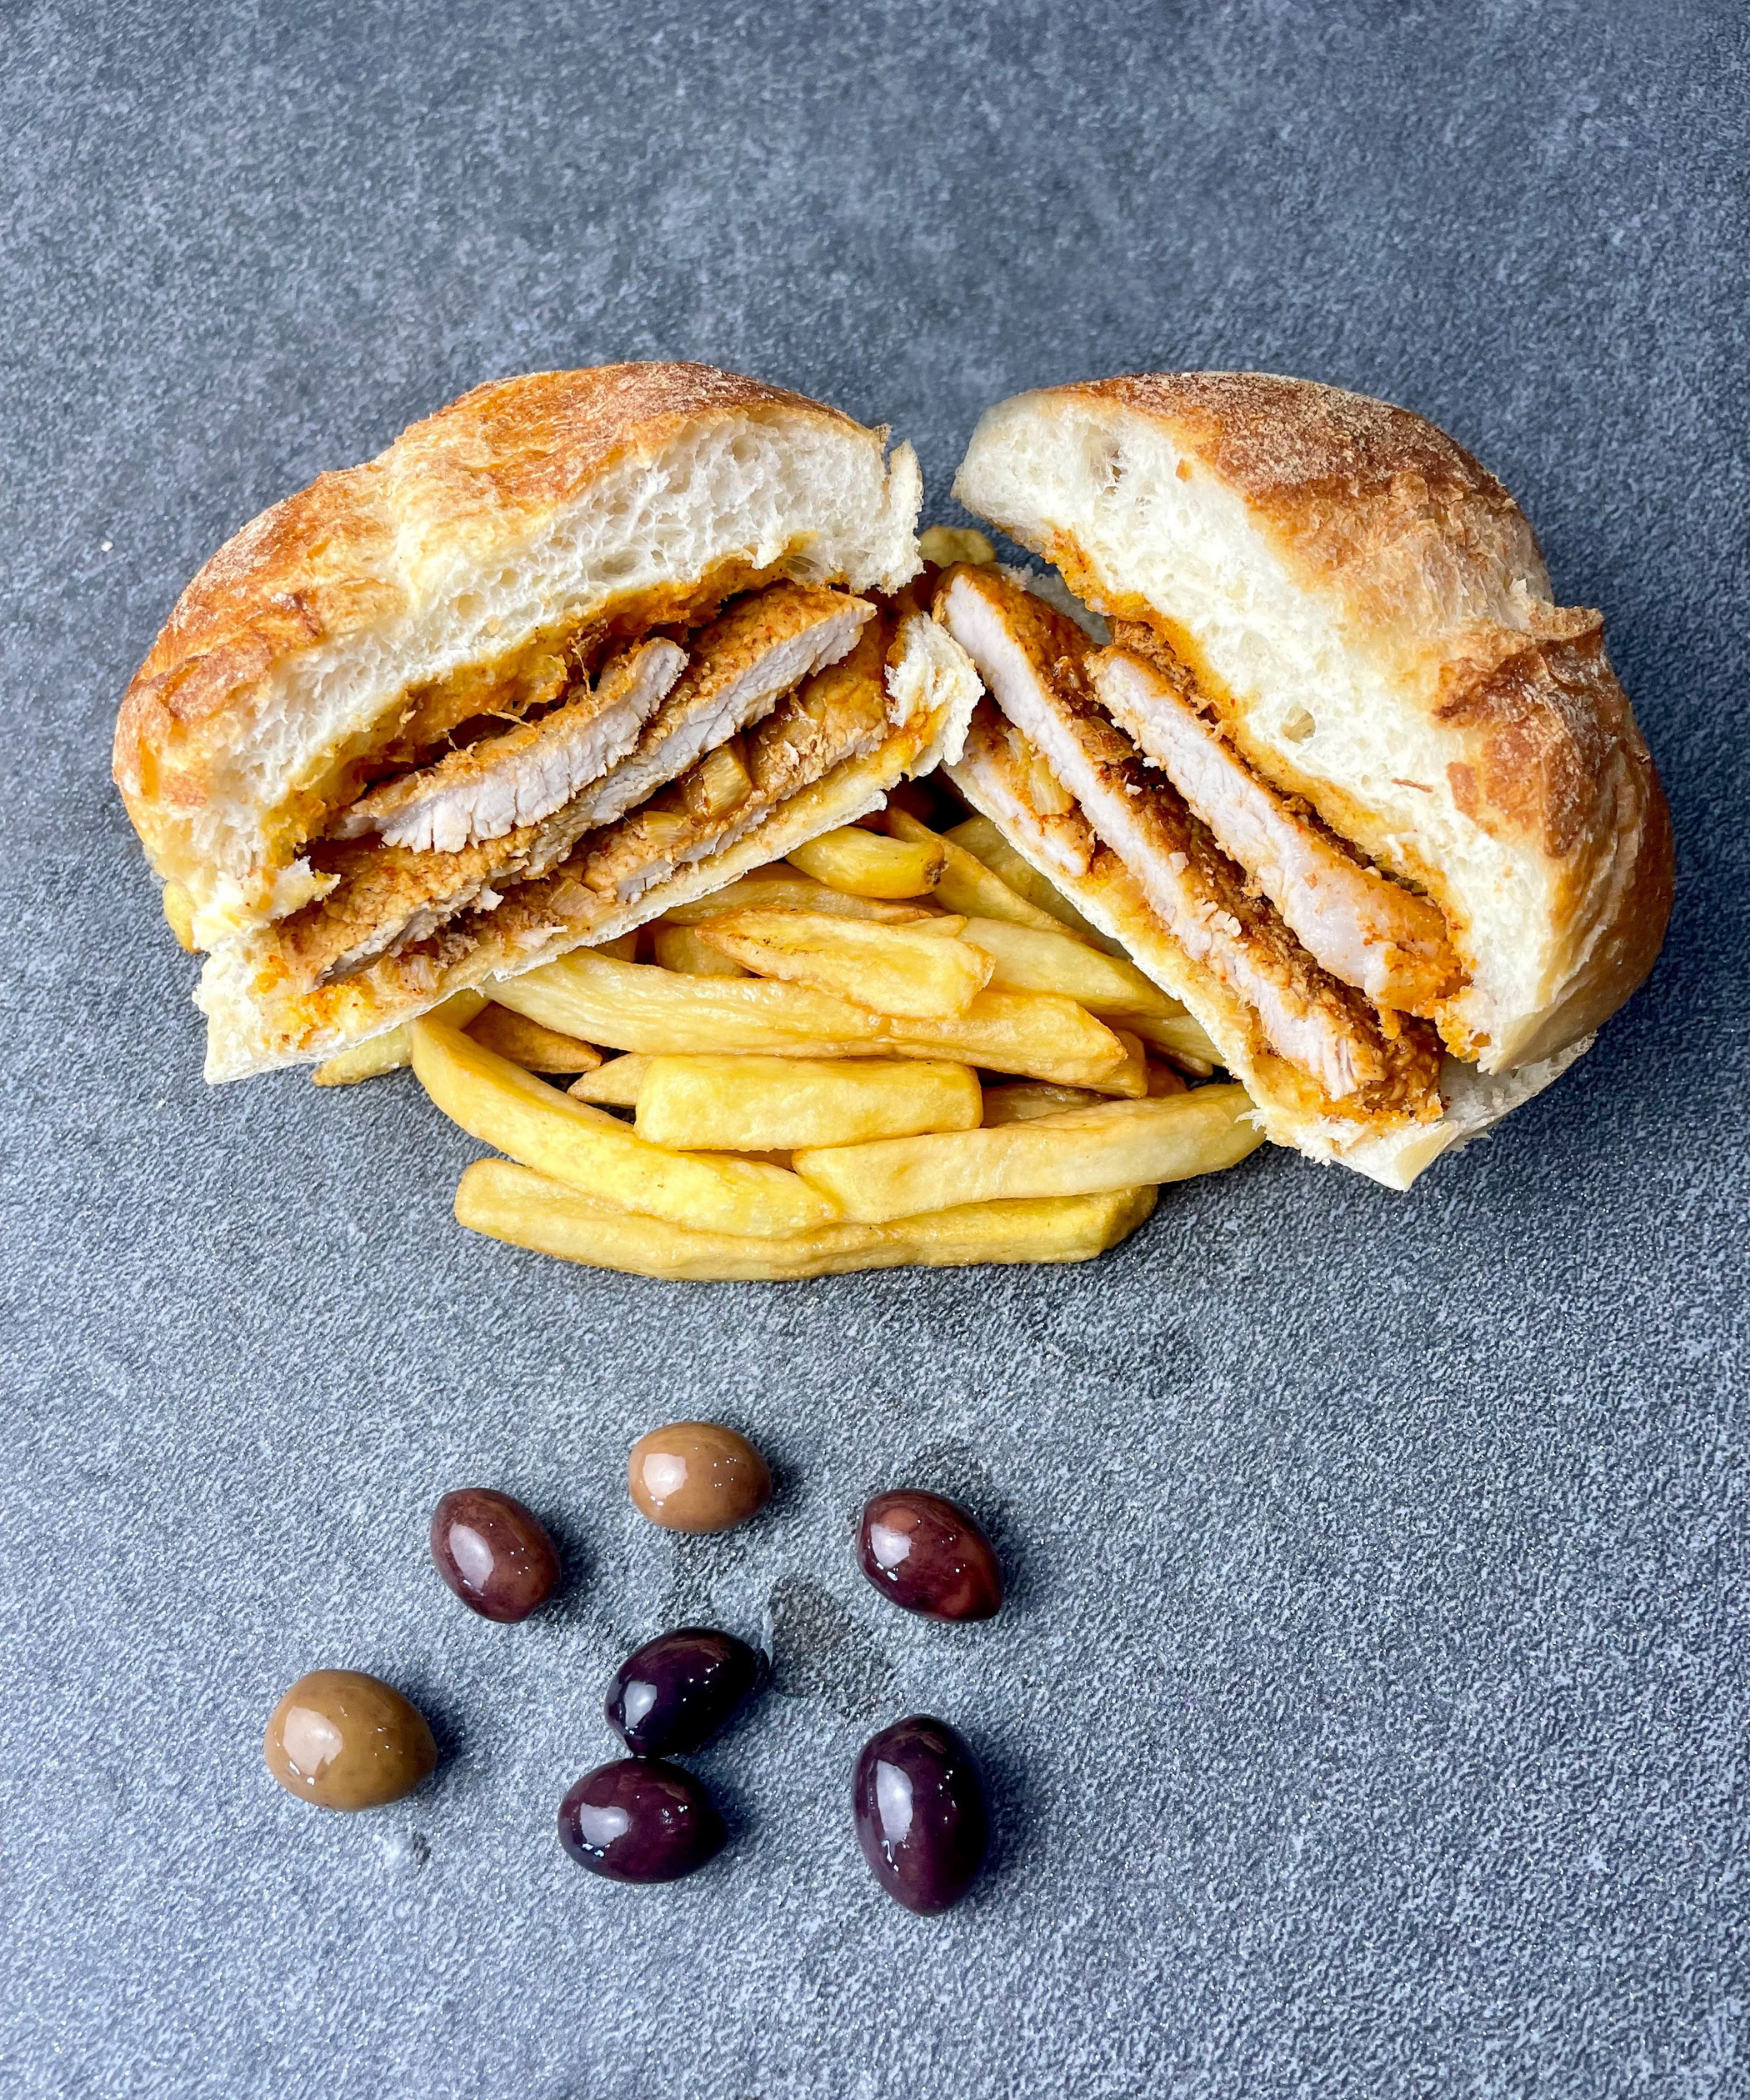 Bifana Recipe - How To Make The Best Portuguese Sandwich